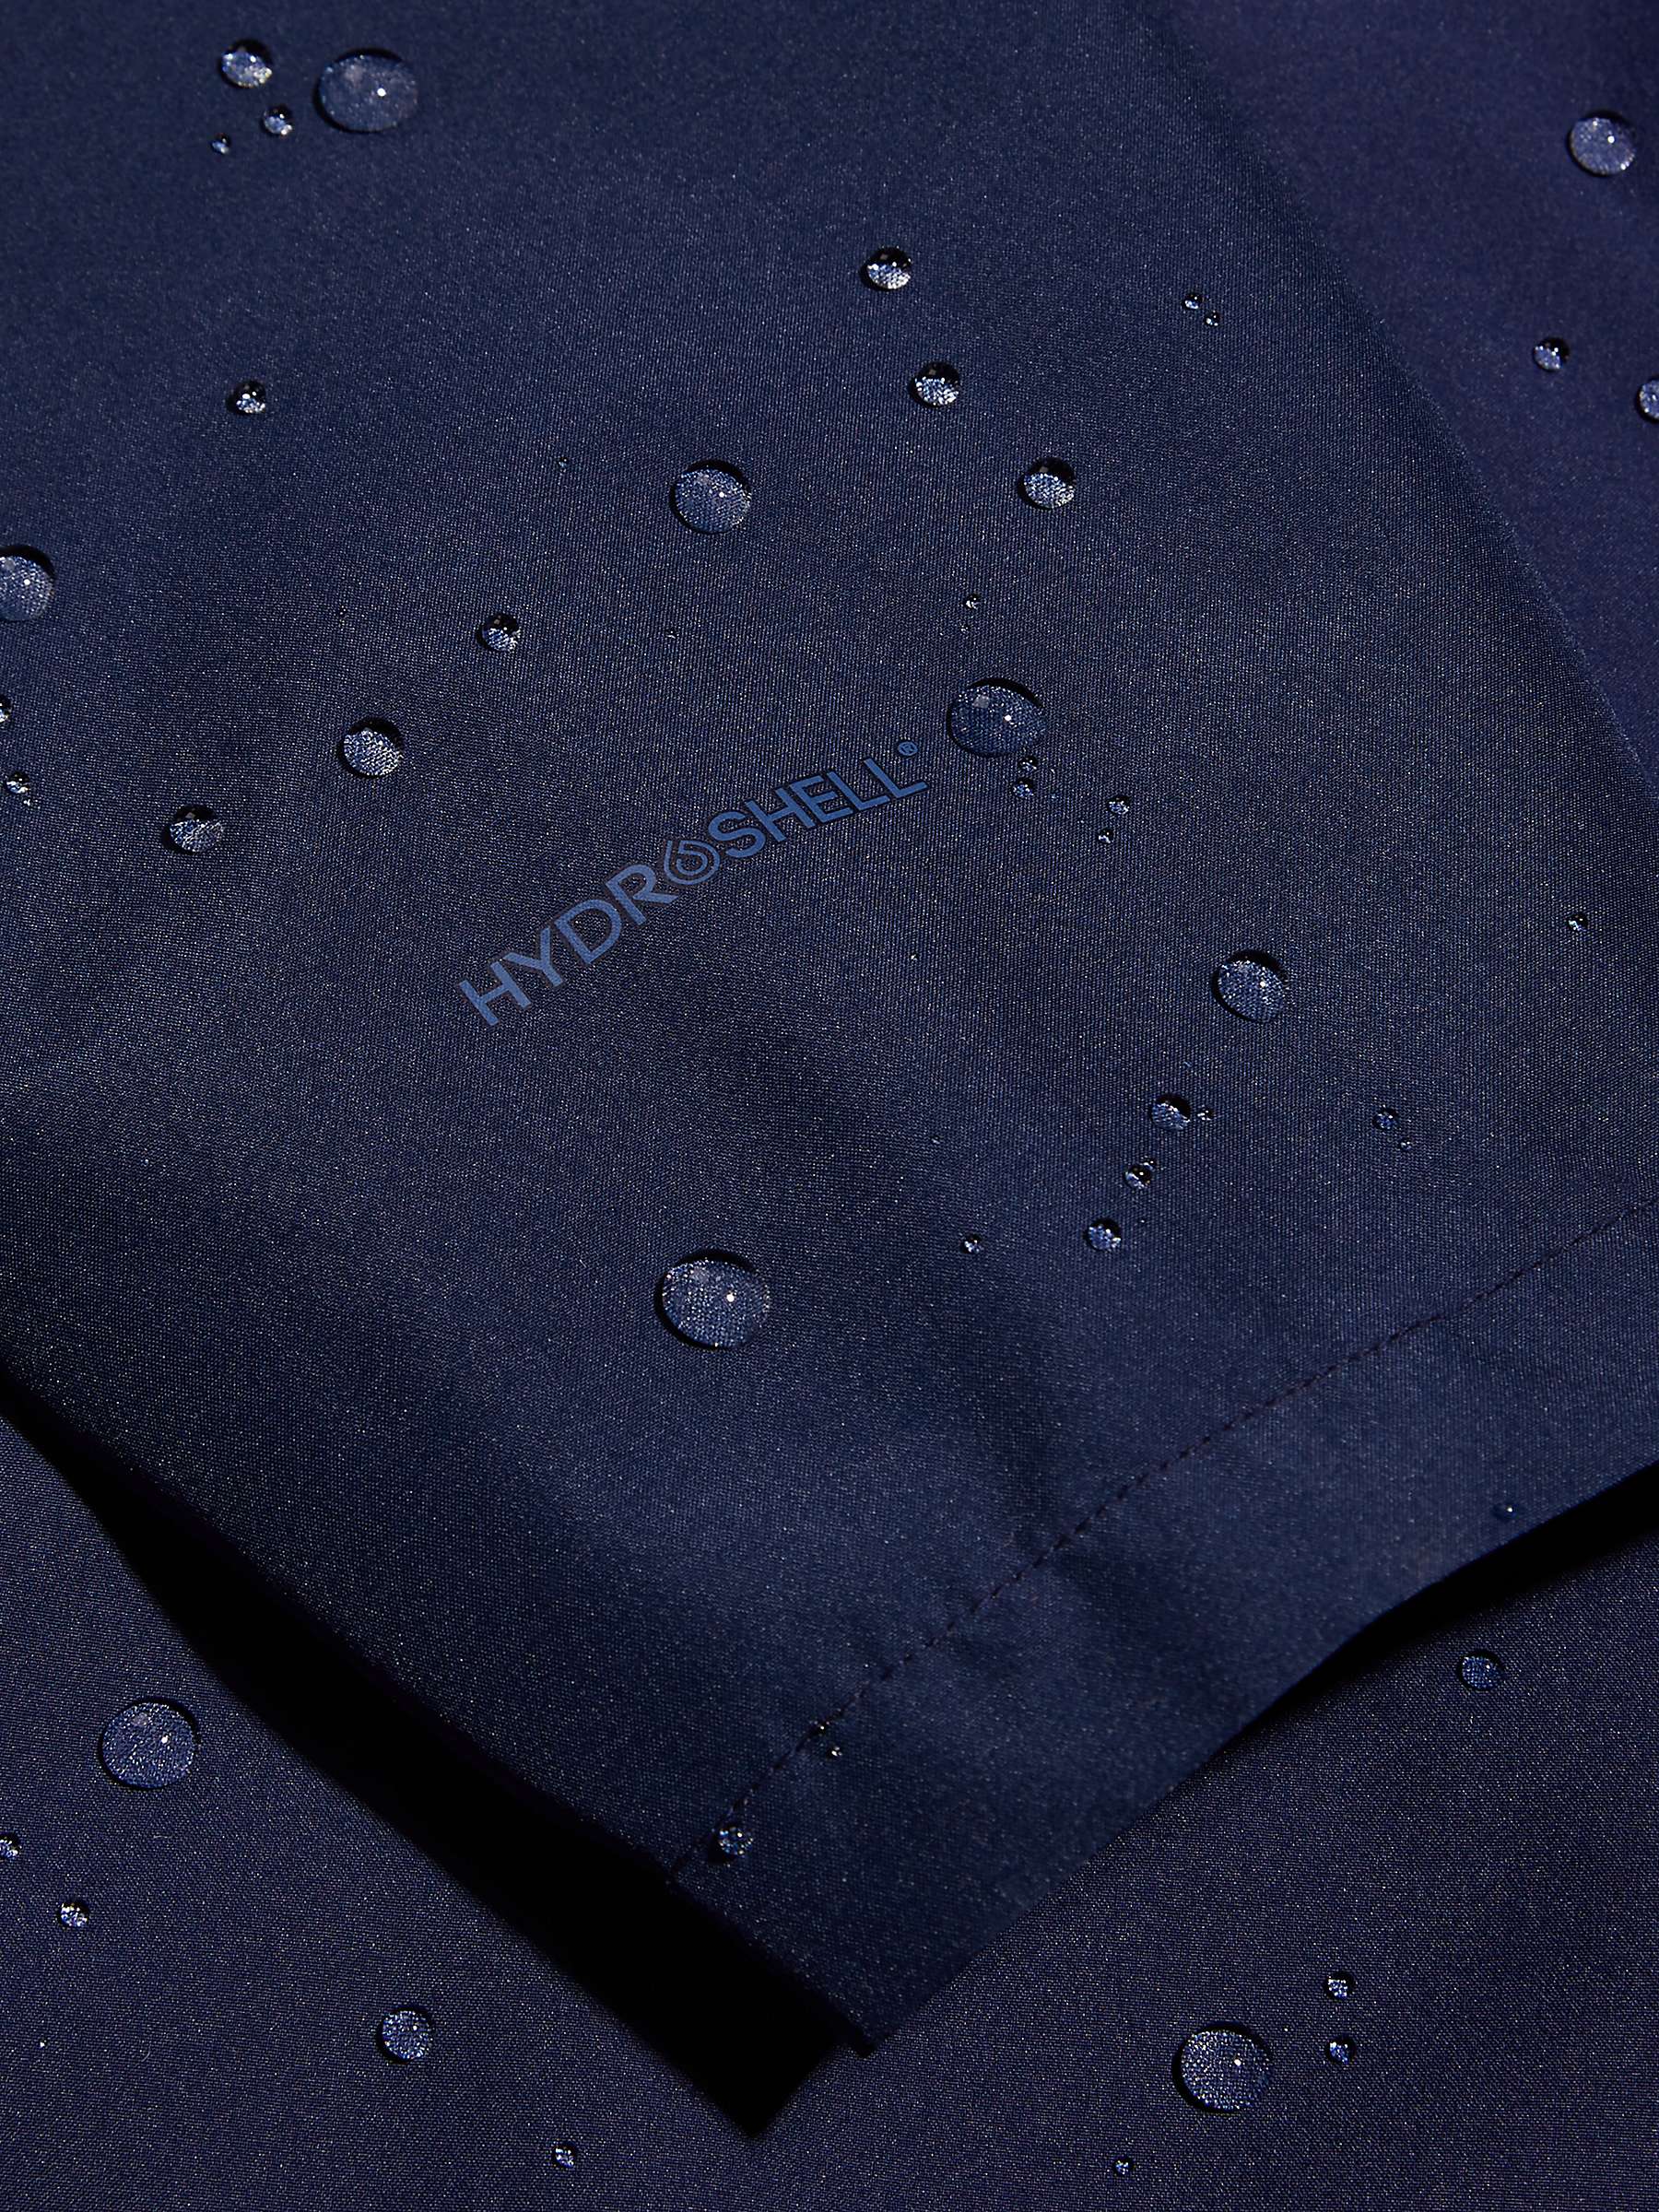 Buy Berghaus Deluge Pro 3.0 Men's Waterproof Jacket, Navy Online at johnlewis.com